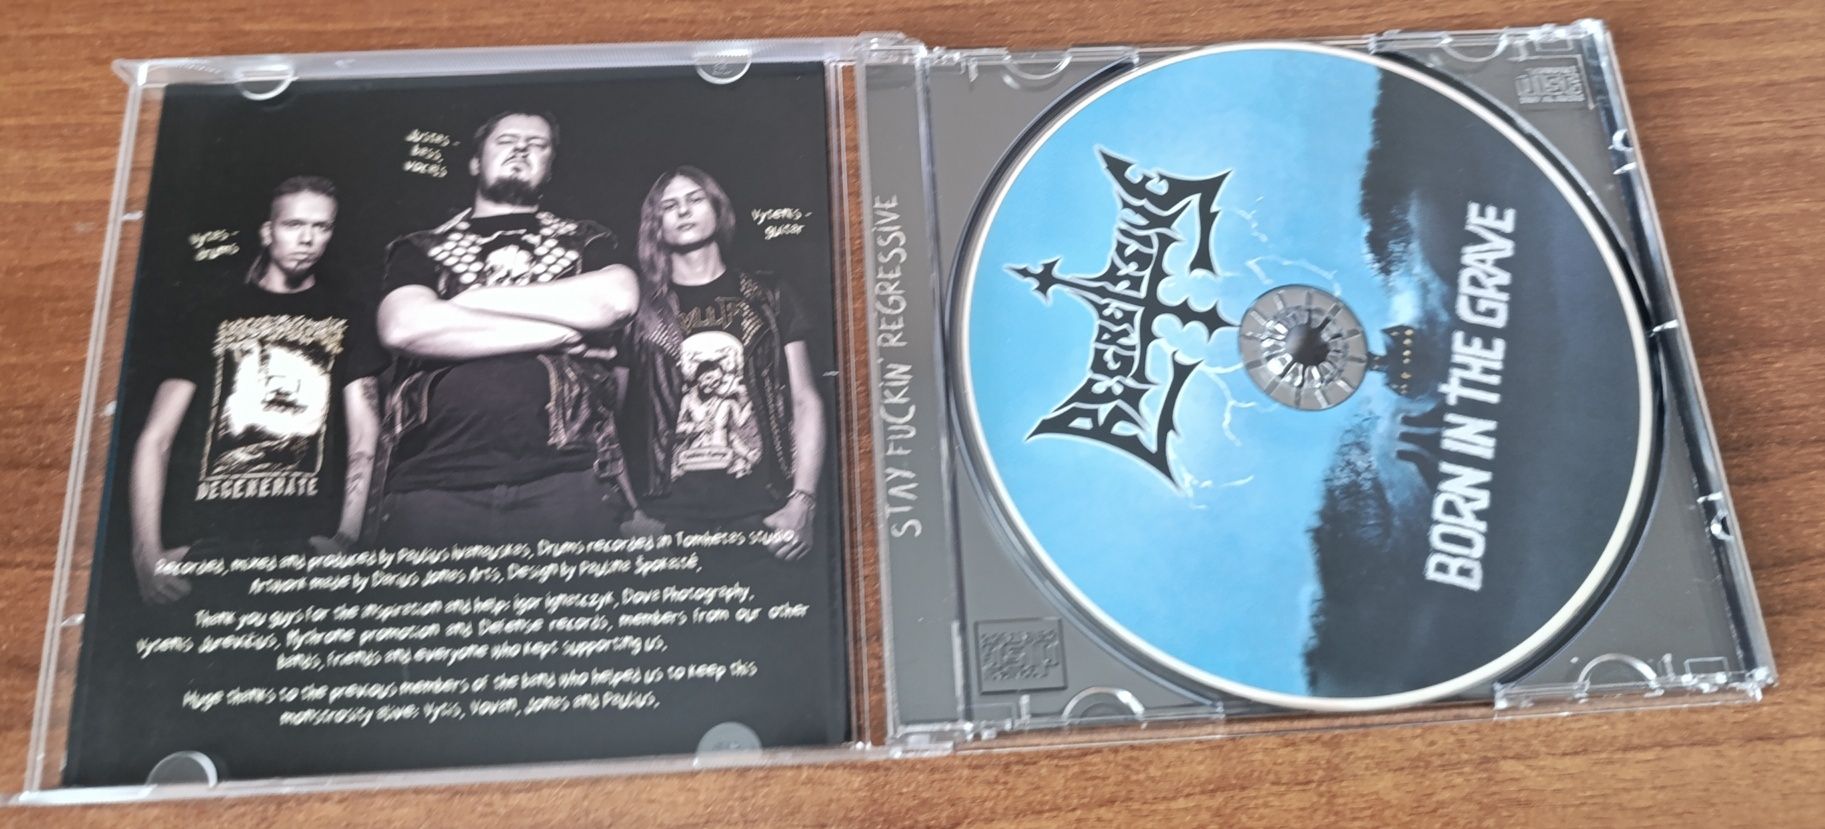 REGRESSIVE - Born In The Grave - Black speed metal cd